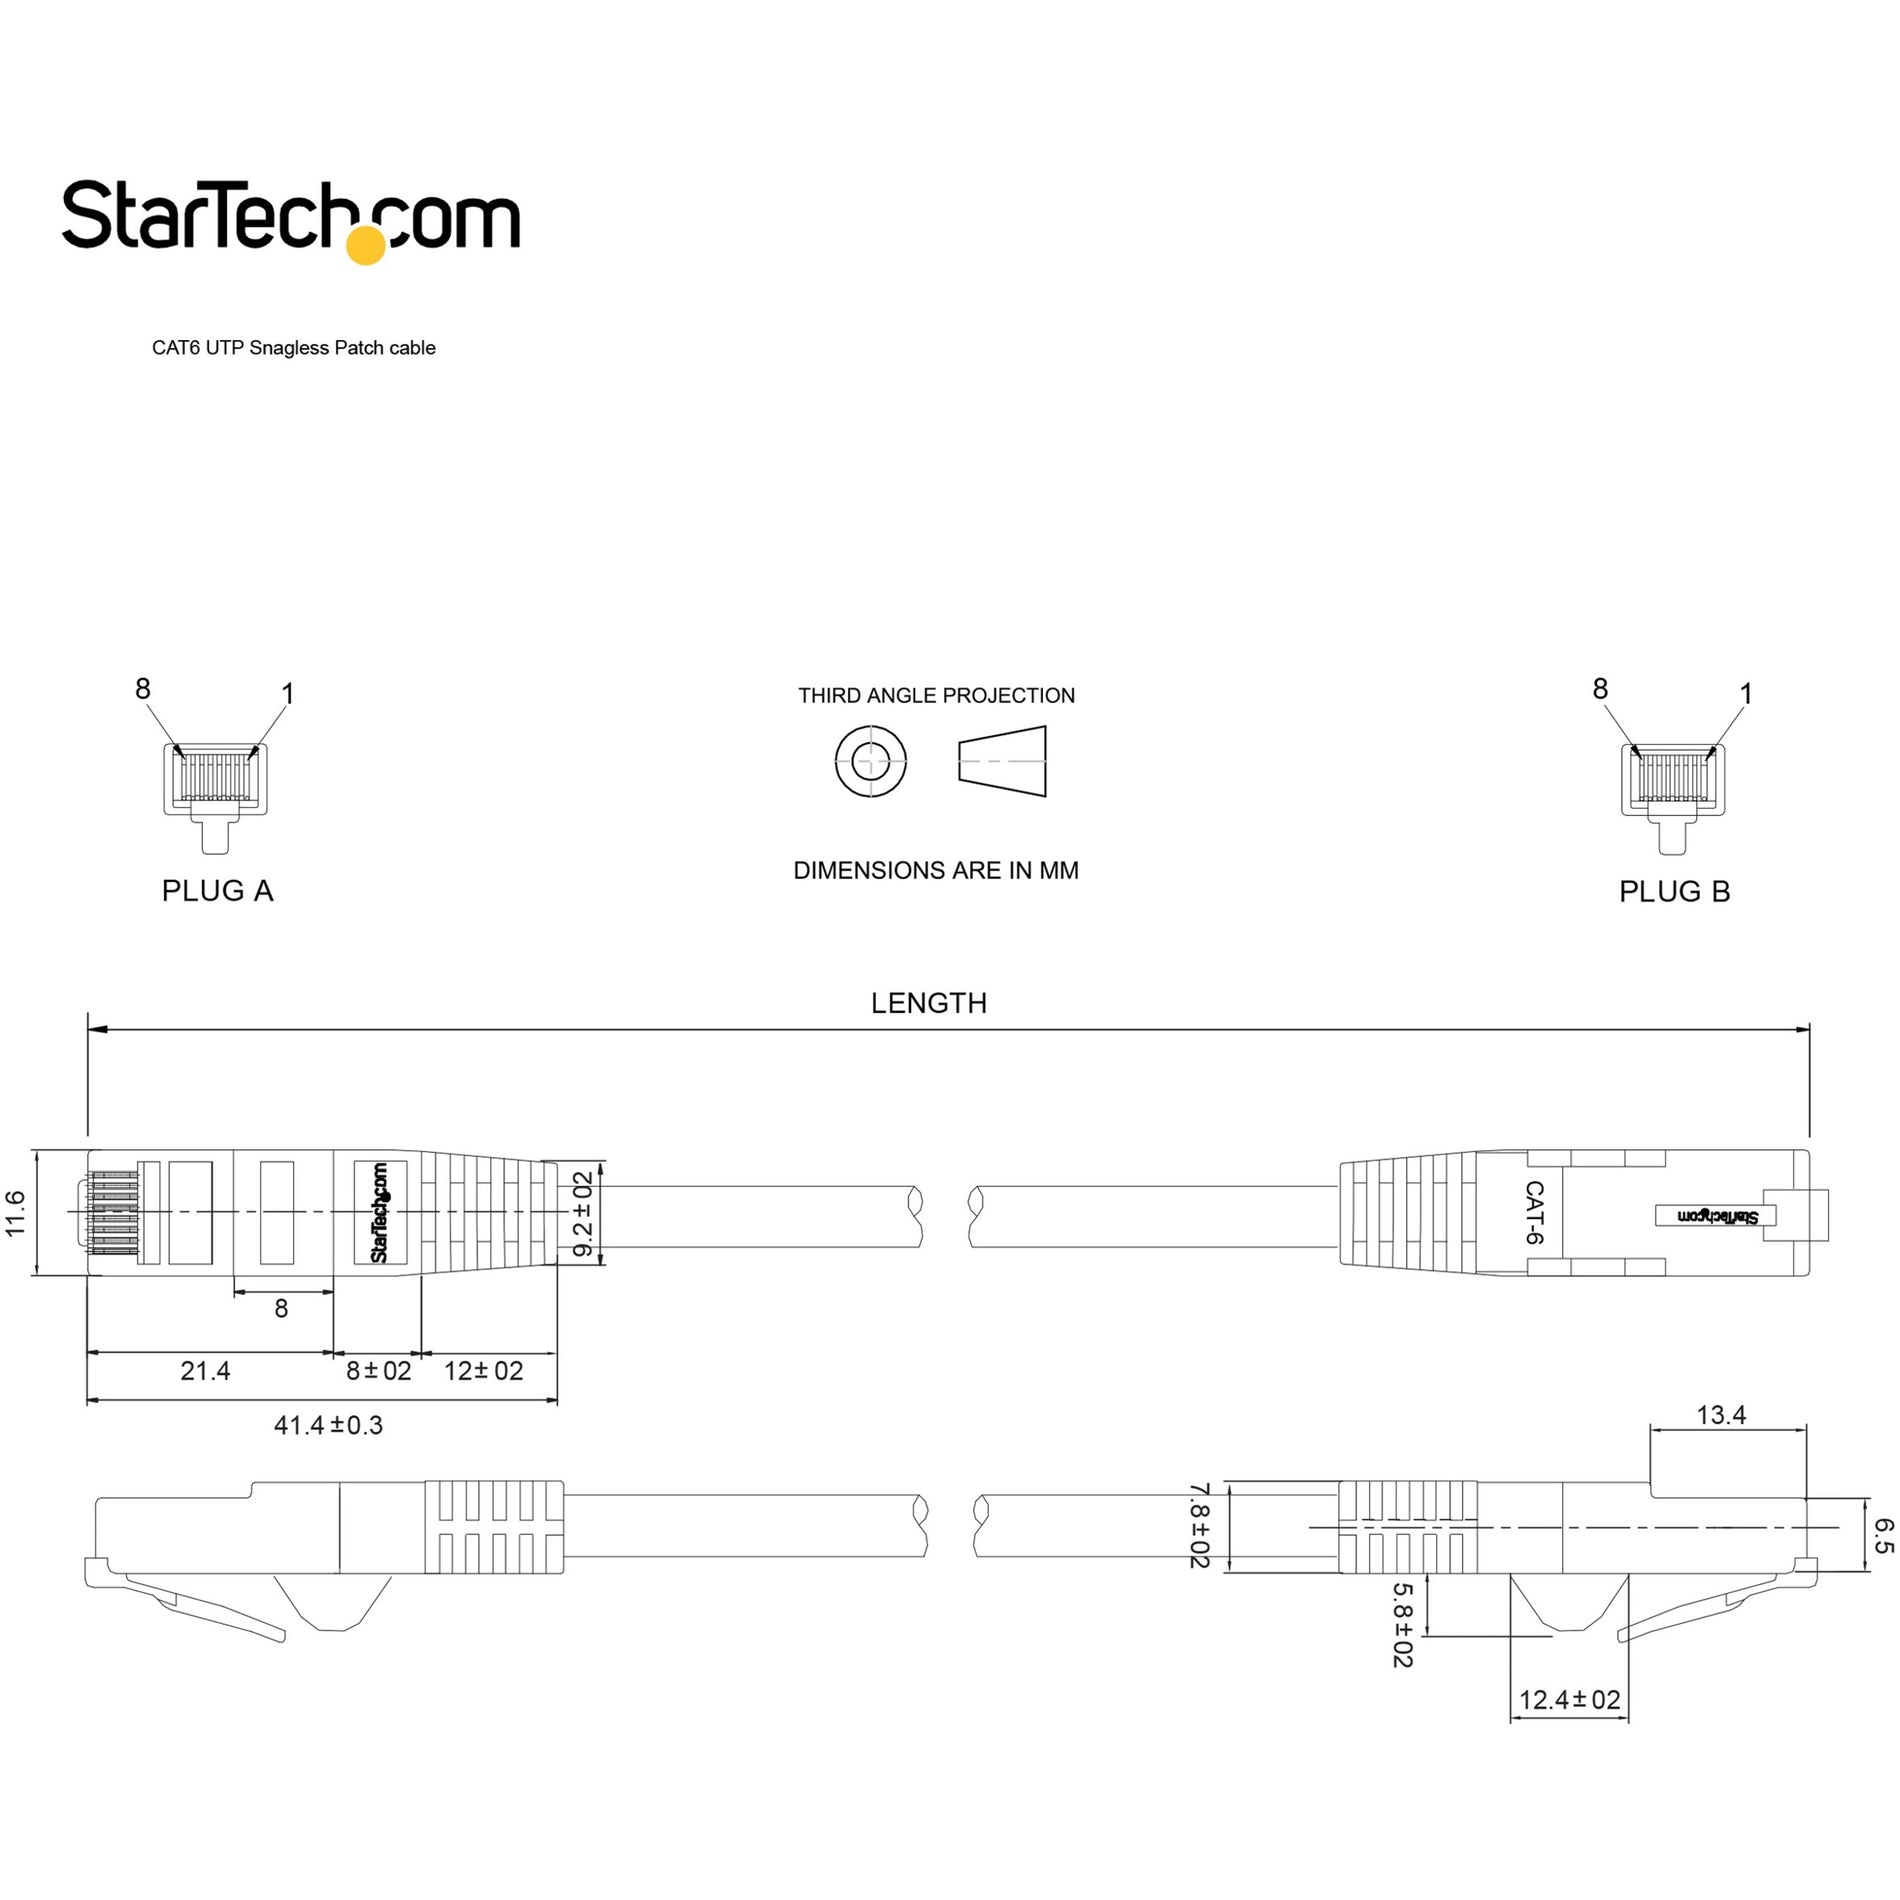 StarTech.com N6PATCH14BK Cat6 كبل التصحيح ، 14ft أسود كبل إيثرنت ، منافذ RJ45 بدون إغراق